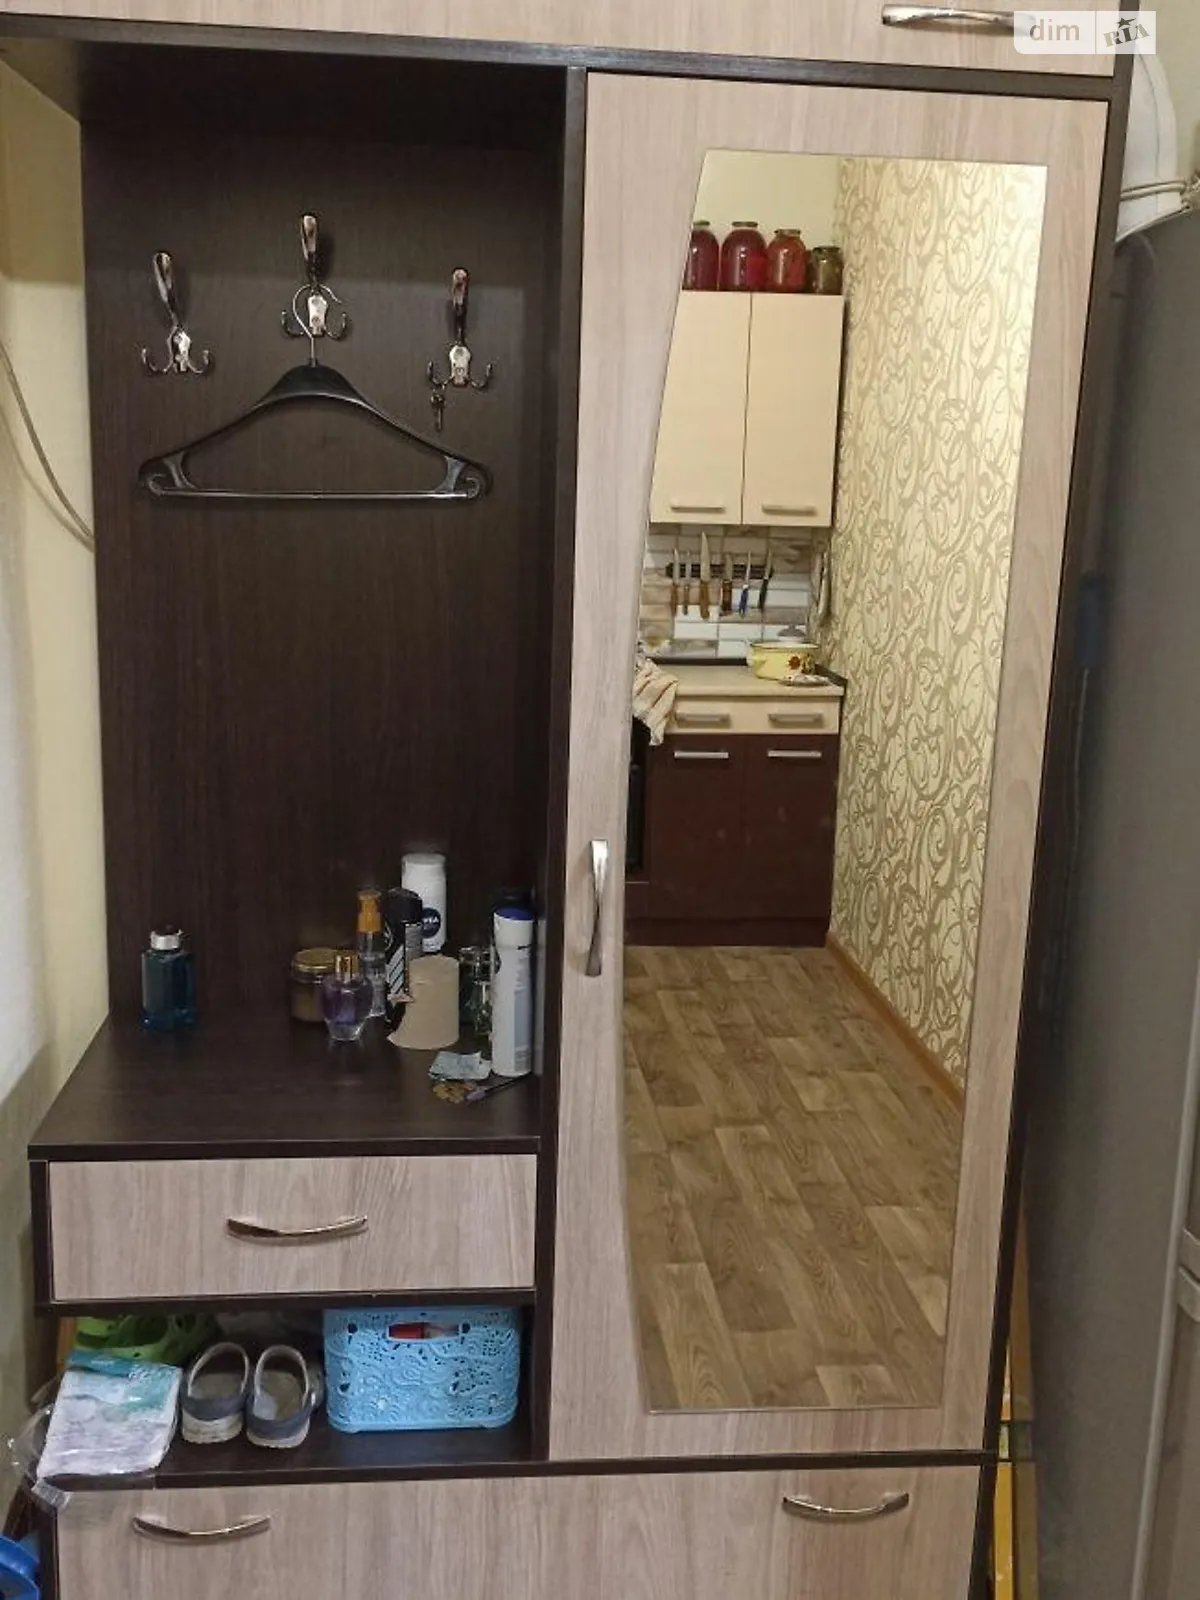 Продается комната 33 кв. м в Харькове - фото 2